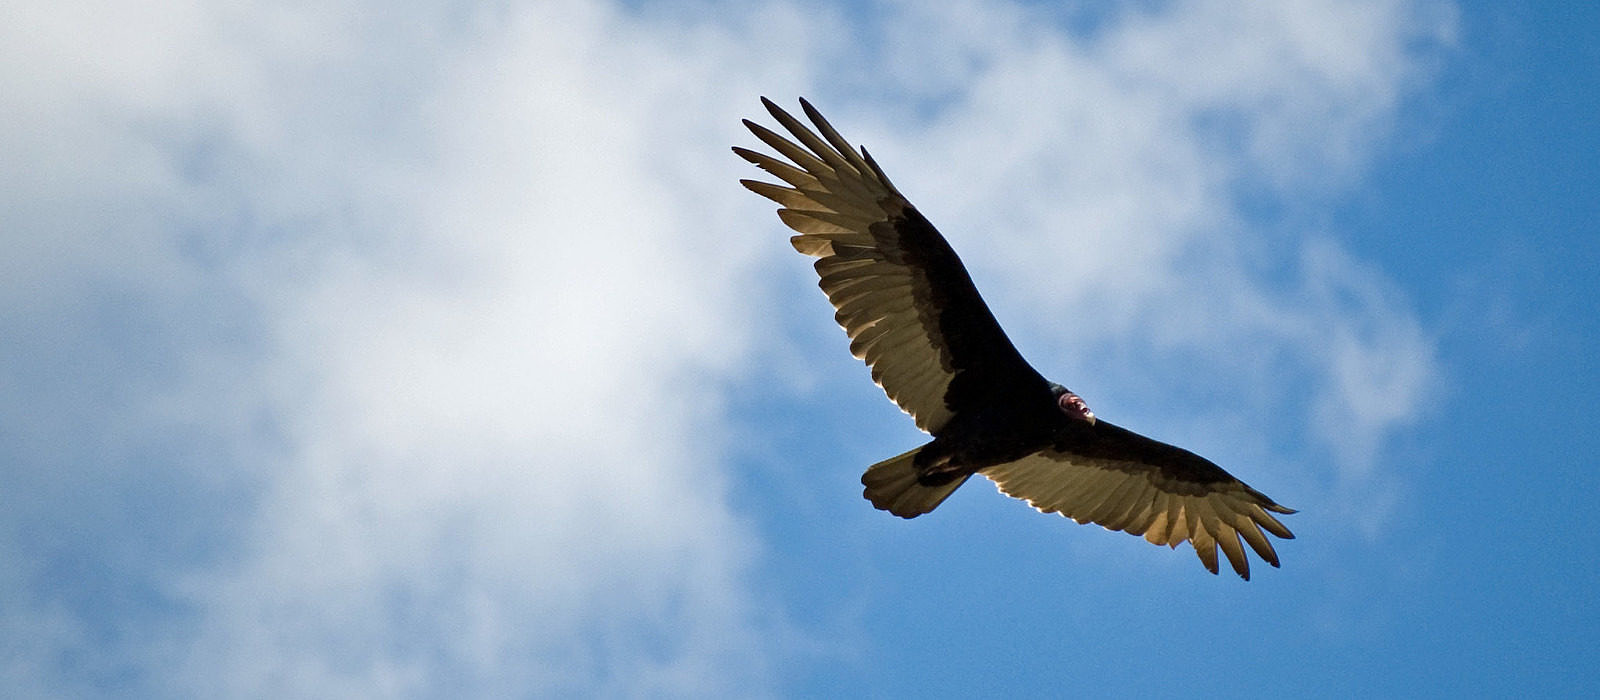 A Turkey Vulture in flight. (photo © Ken Bosma via the Flickr Creative Commons)